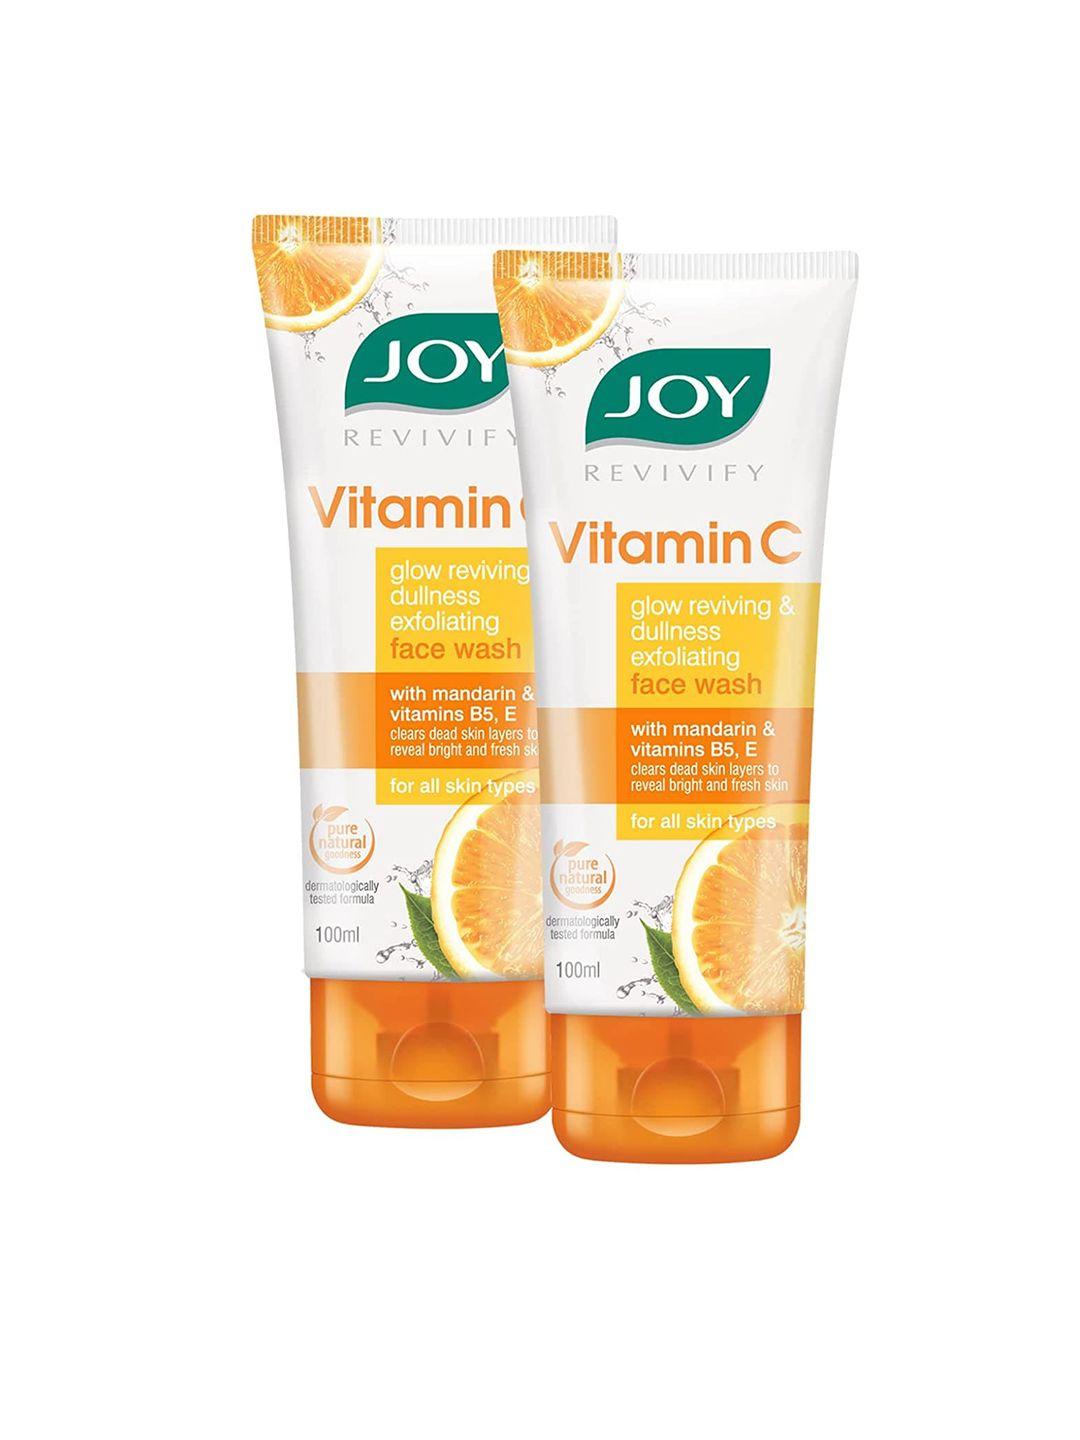 joy set of 2 revivify vitamin c face wash with mandarin & vitamins b5 & e - 100ml each